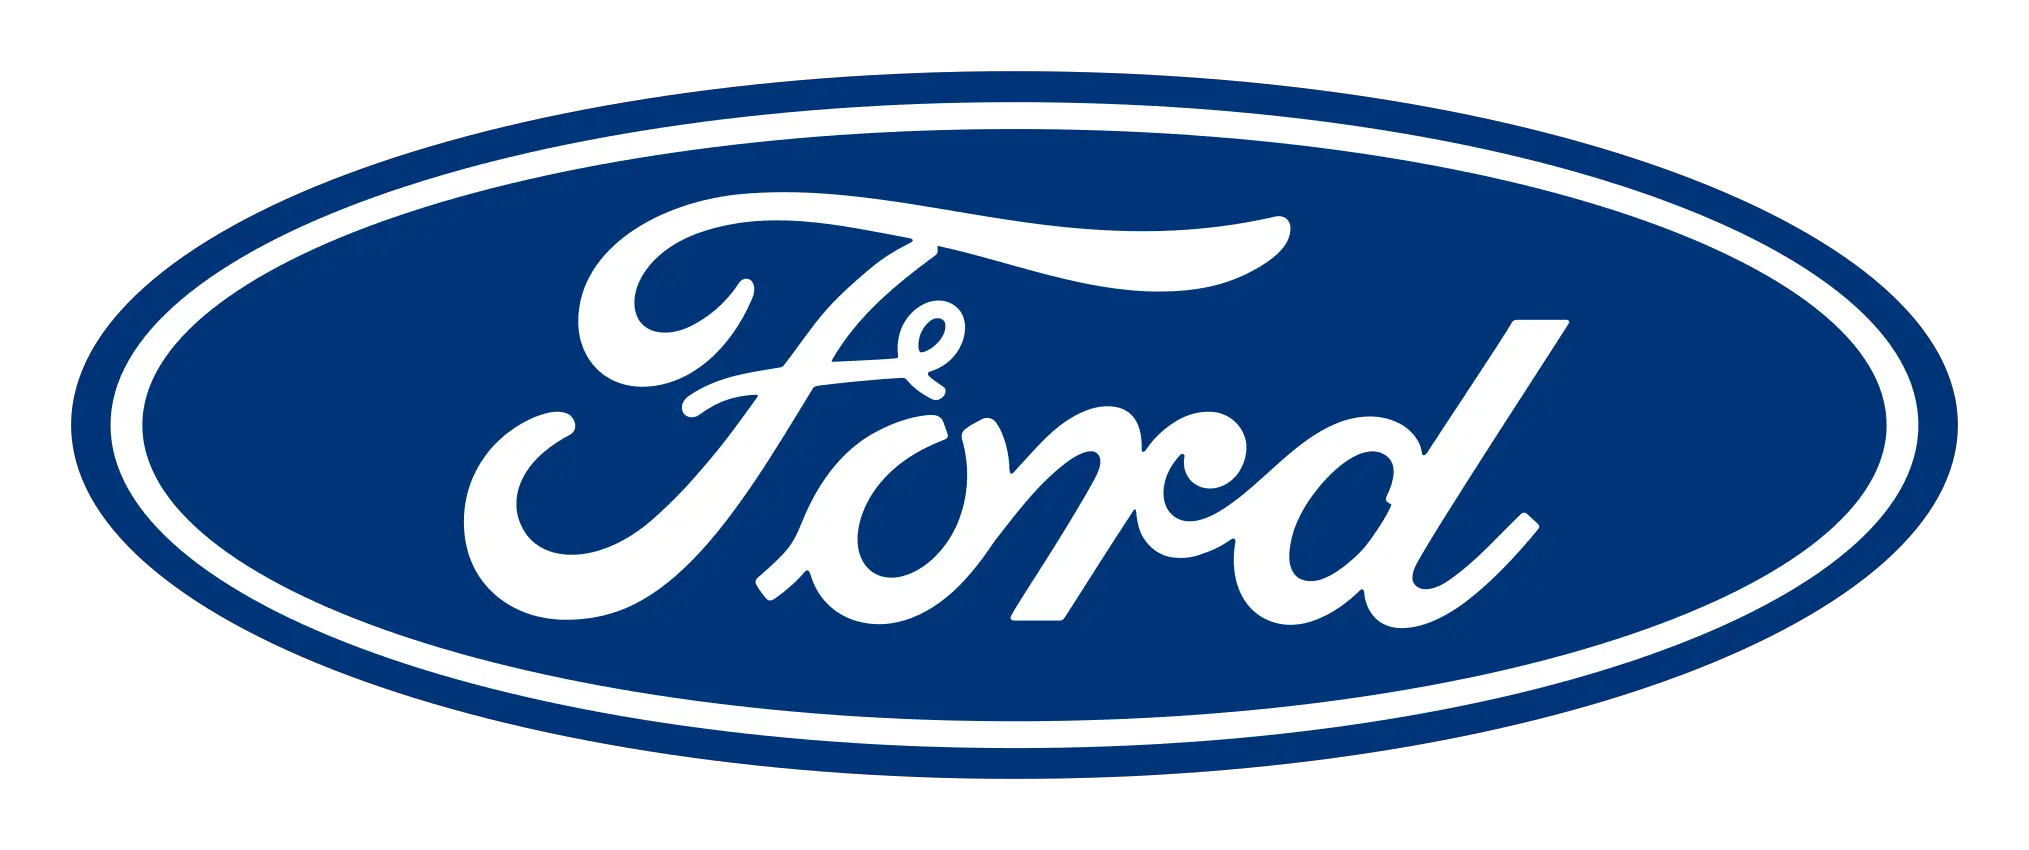 ford logo 2017 download